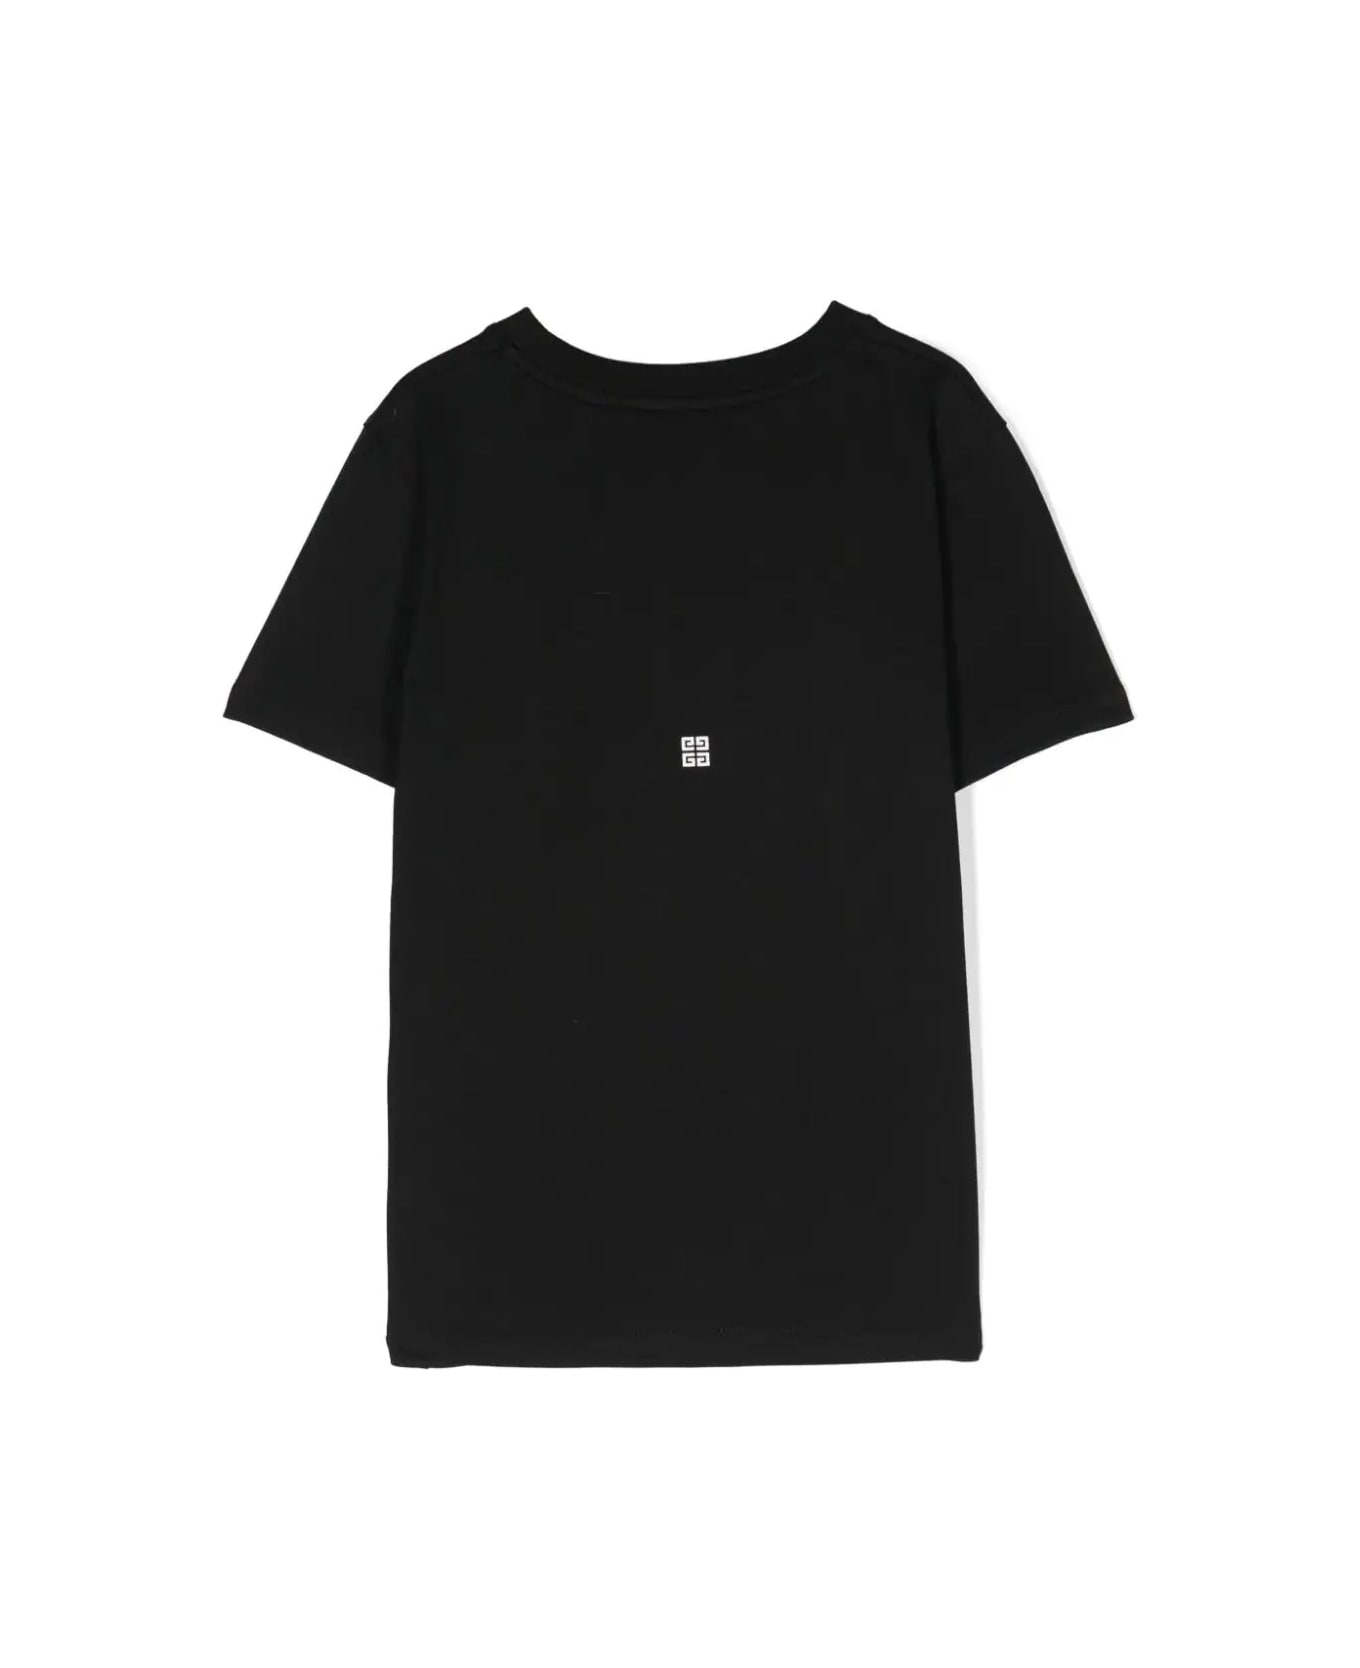 Givenchy Black T-shirt With 4g Givenchy Micro eyewear - BLACK